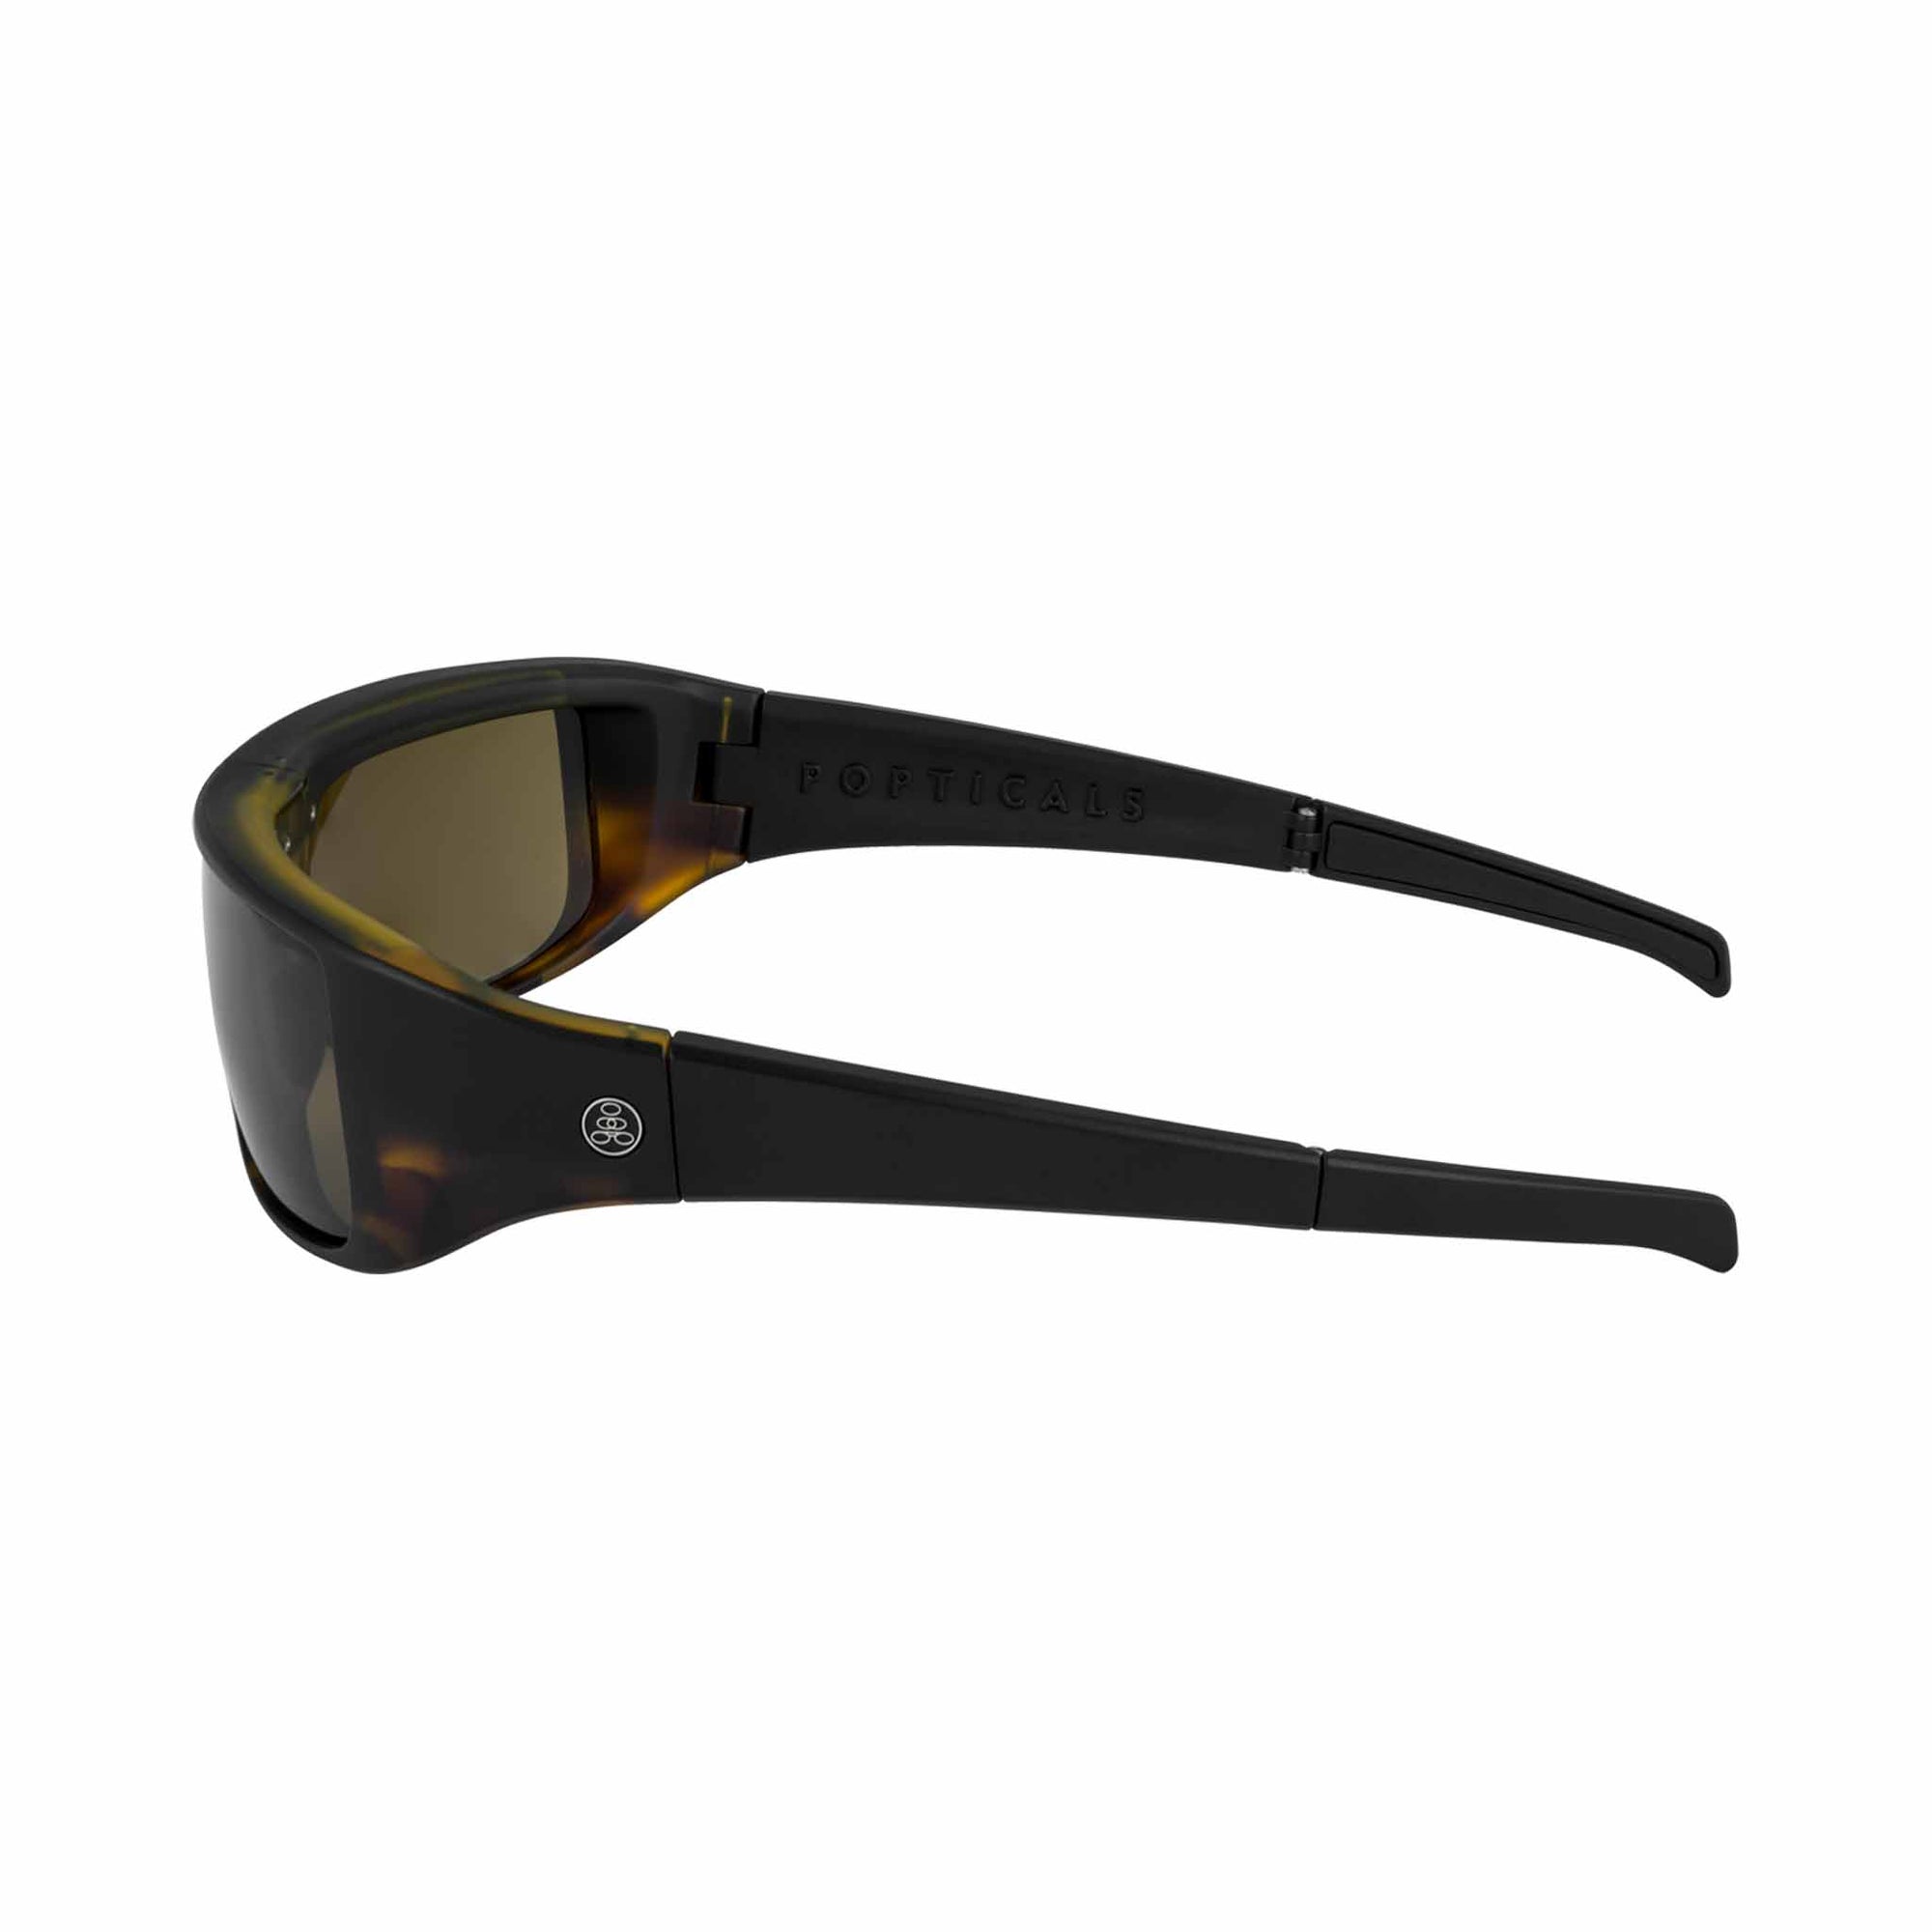 Matte black tortoise frame sunglasses with brown lenses by POPGEAR